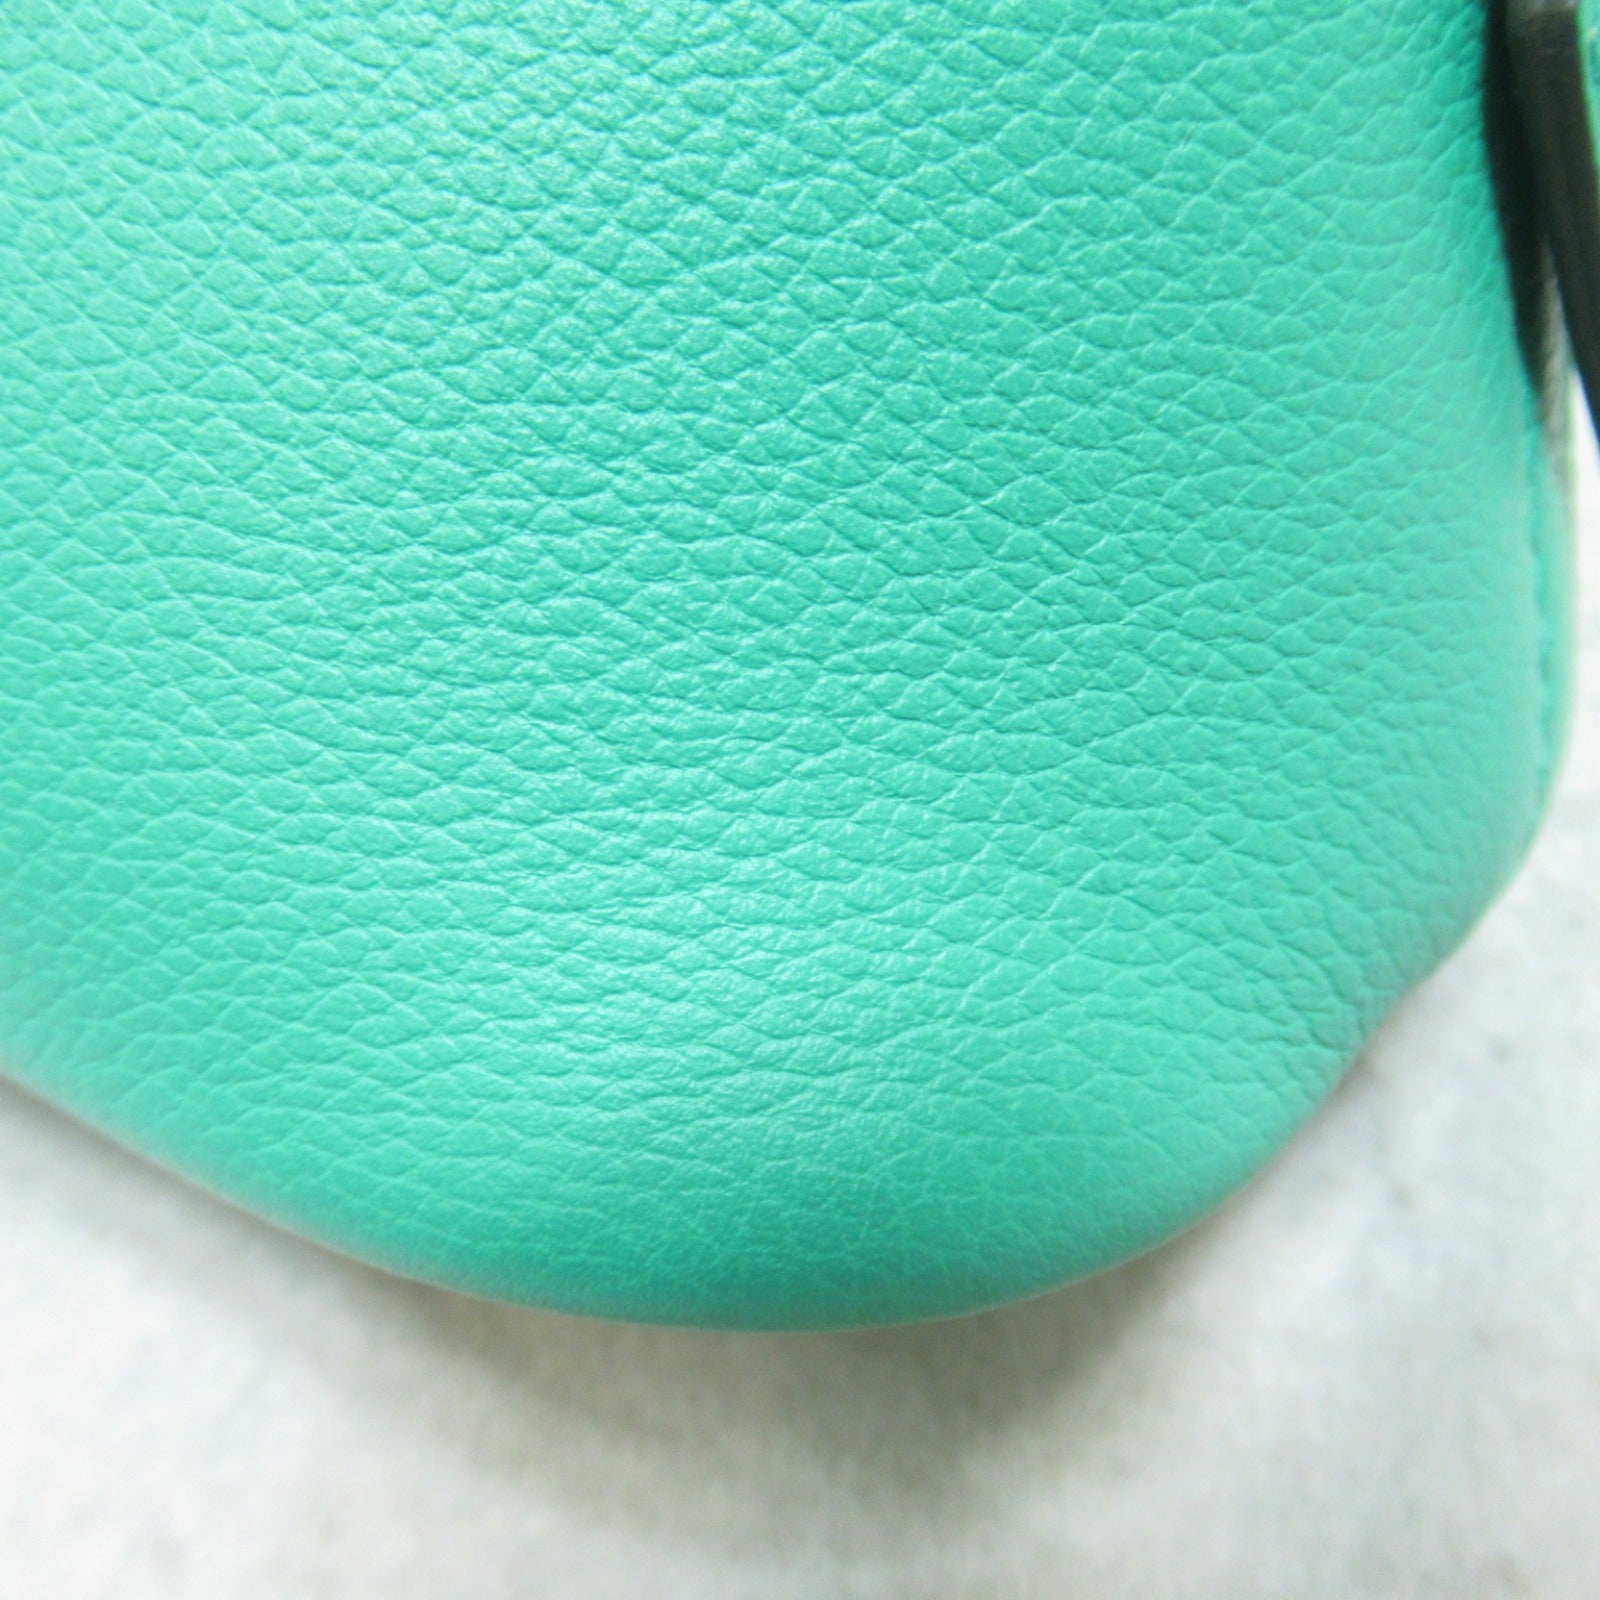 Hermes Boiled 1923 25 Handbag Handbag Handbag Handbags Leather Evergreen  Green Classic